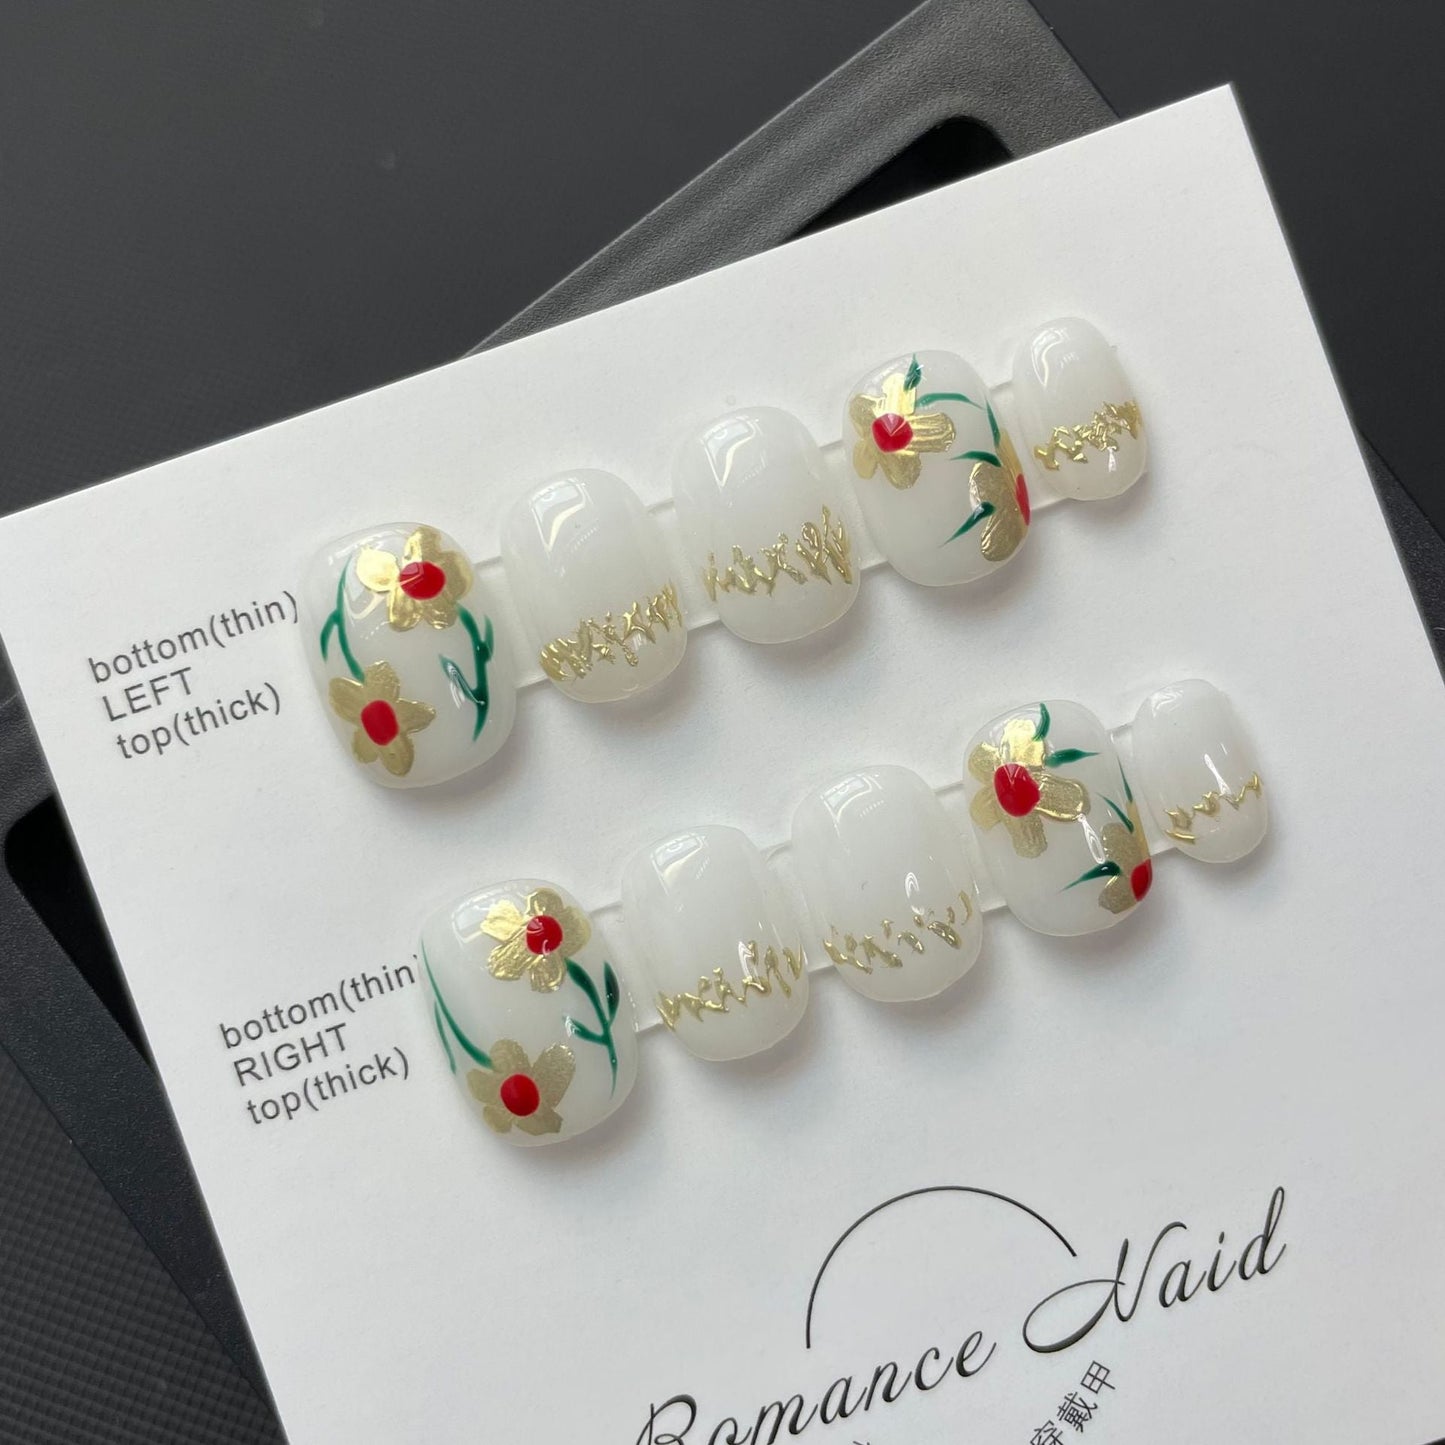 643 Gilded flowers press on nails 100% handmade false nails white